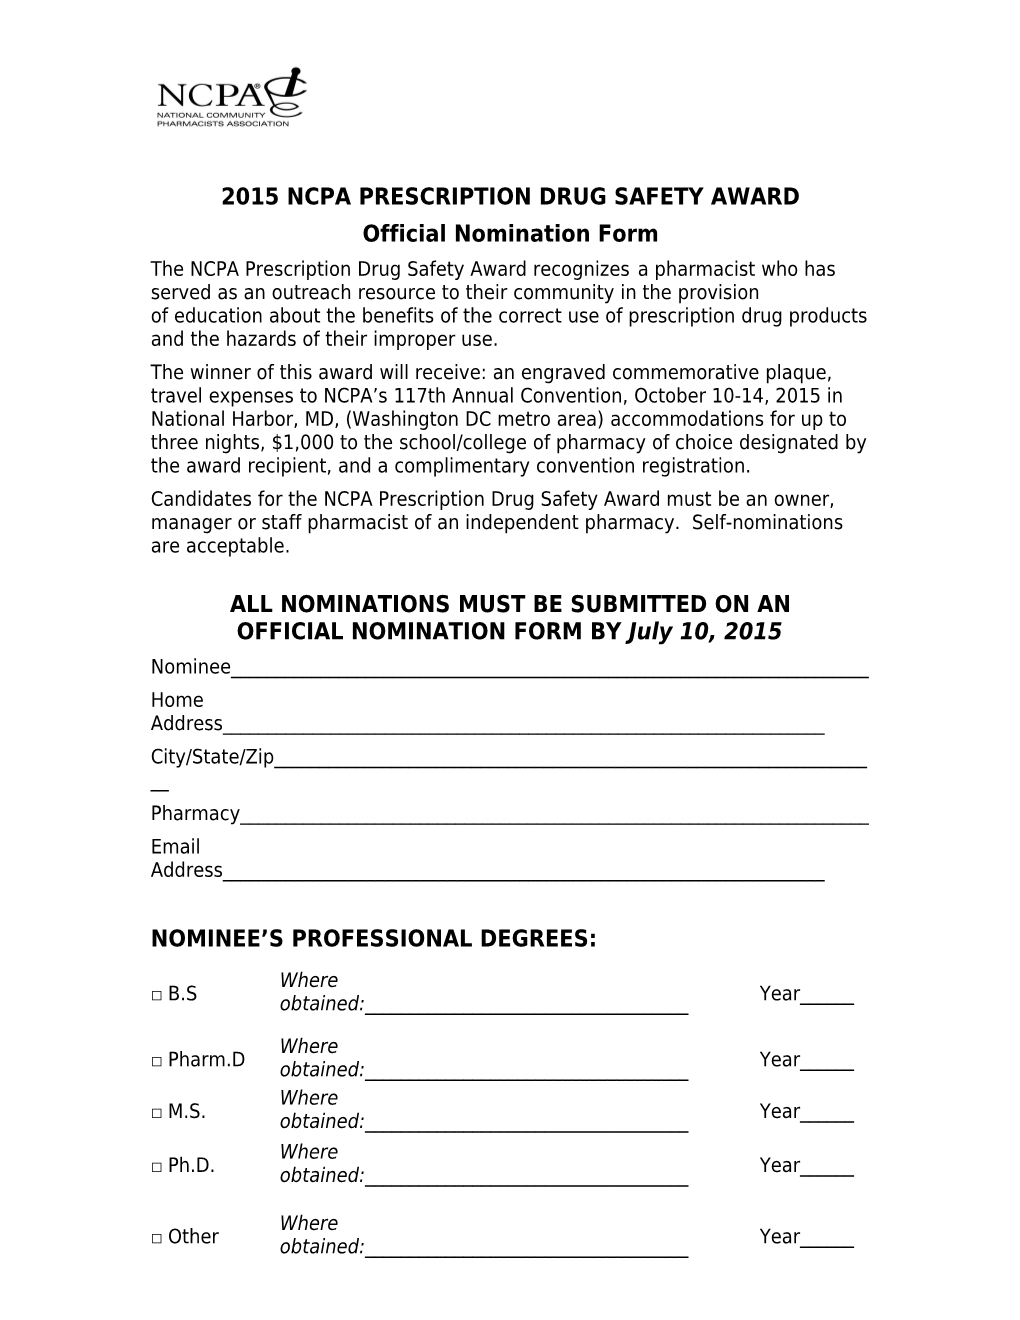 2006 Ncpa Prescription Drug Safety Award